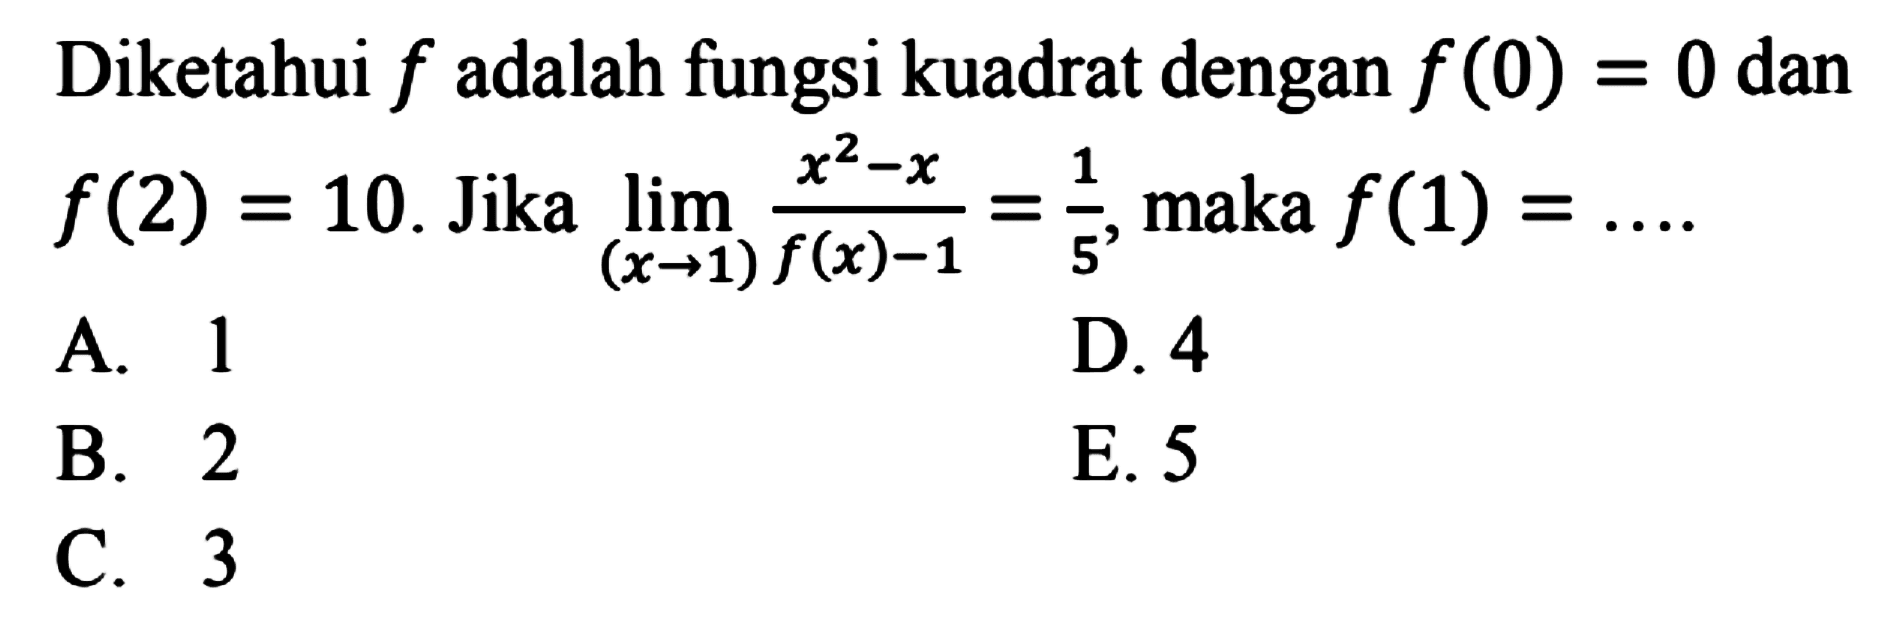 Diketahui f adalah fungsi kuadrat dengan f(0)=0 dan f(2)=10. Jika limit (x->1) (x^2-x)/(f(x)-1)=1/5, maka f(1)=.... 
